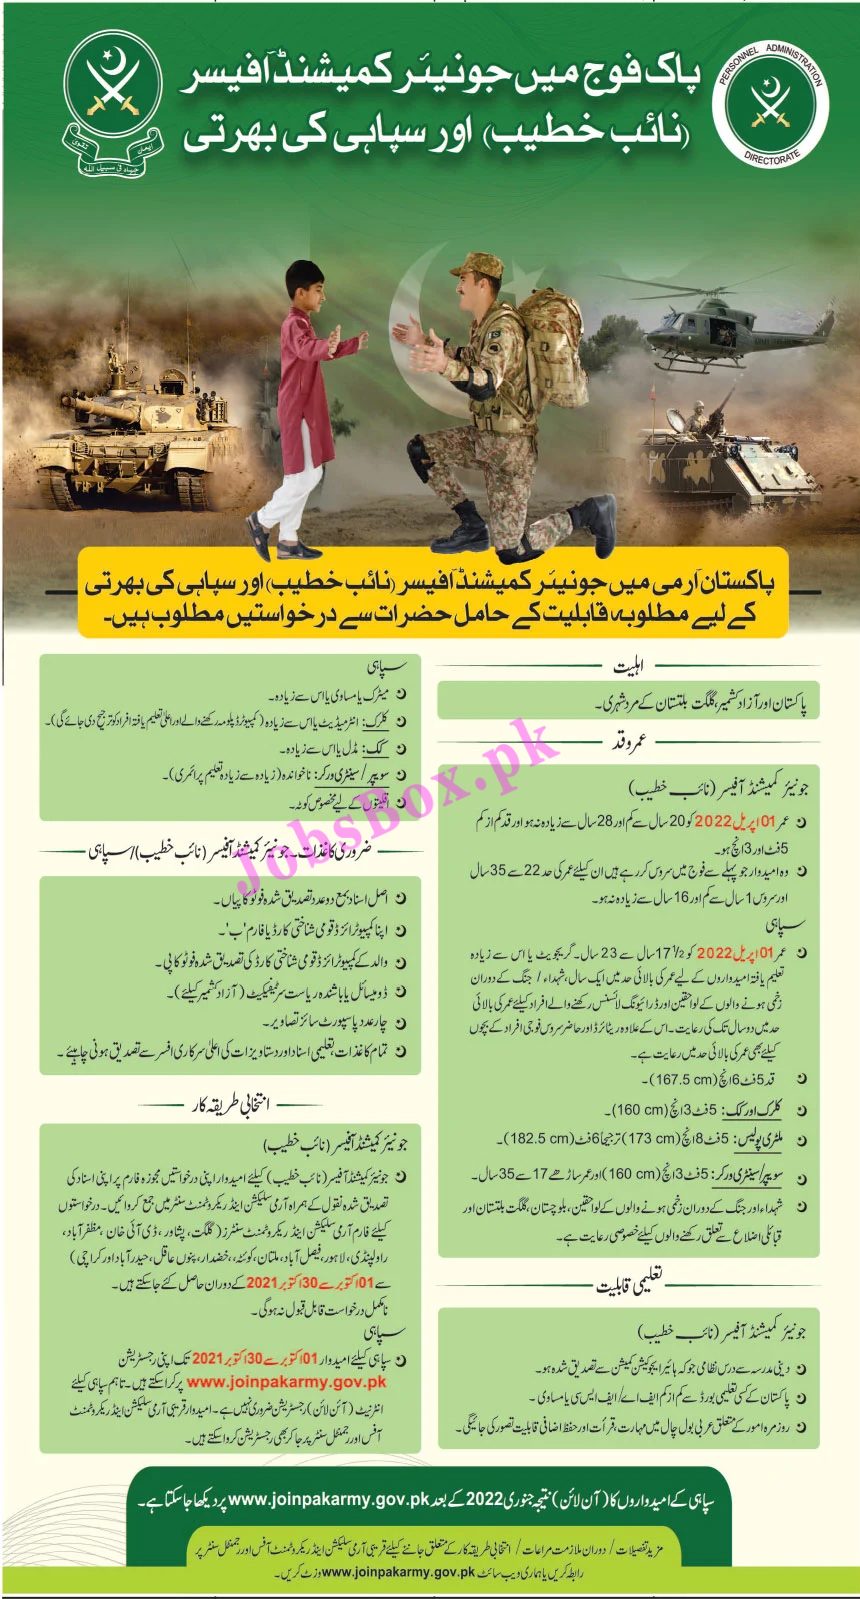 Join Pak Army Jobs 2021 – Online Registration www.joinpakarmy.gov.pk